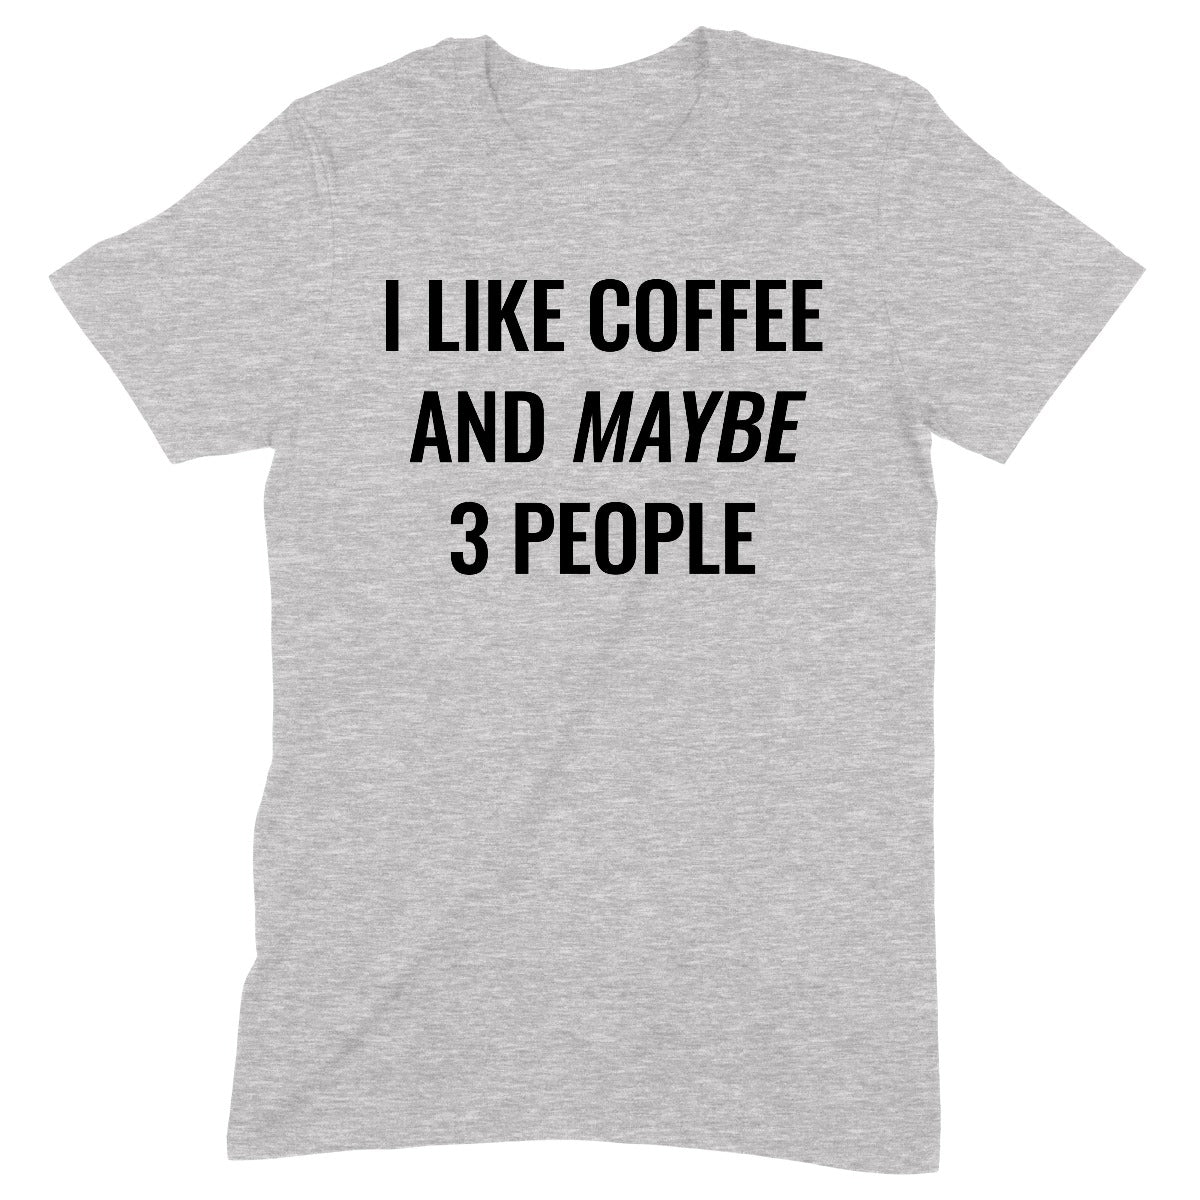 "I Like Coffee" Premium Midweight Ringspun Cotton T-Shirt - Mens/Womens Fits